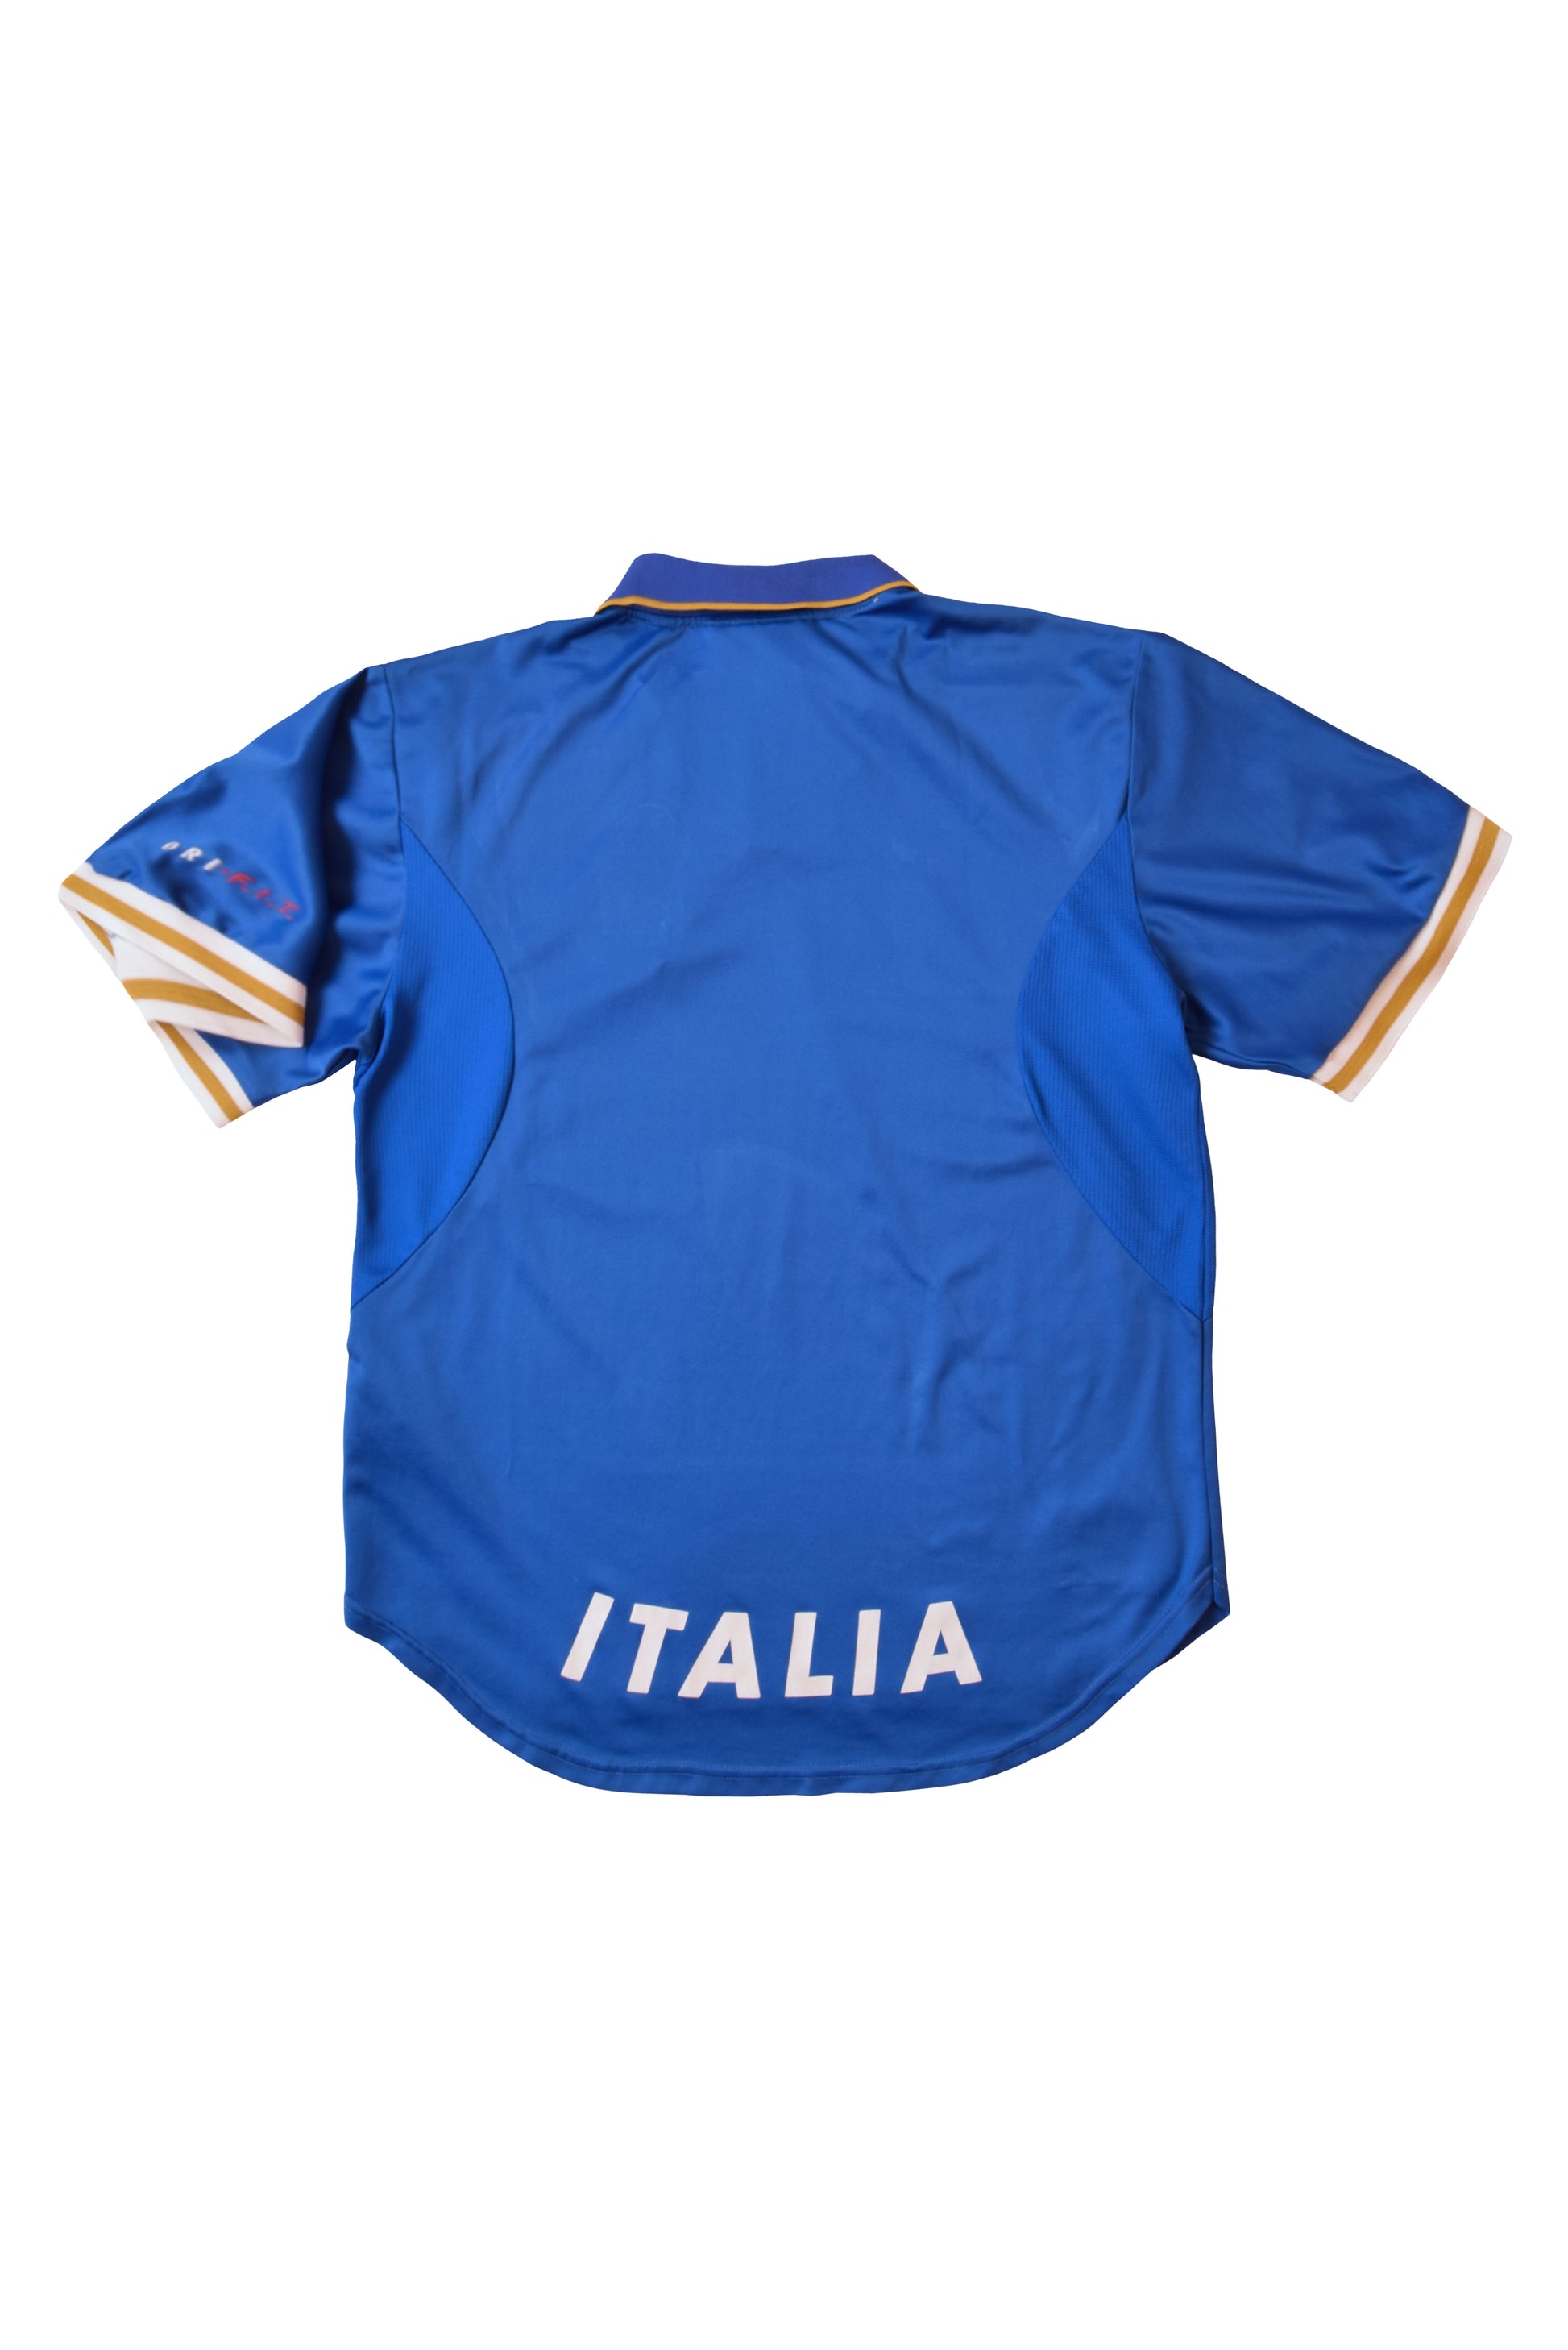 Vintage Italy 1996-1997 Nike Premier DRI FIT Home Football Shirt  Size M Euro 96 Blue